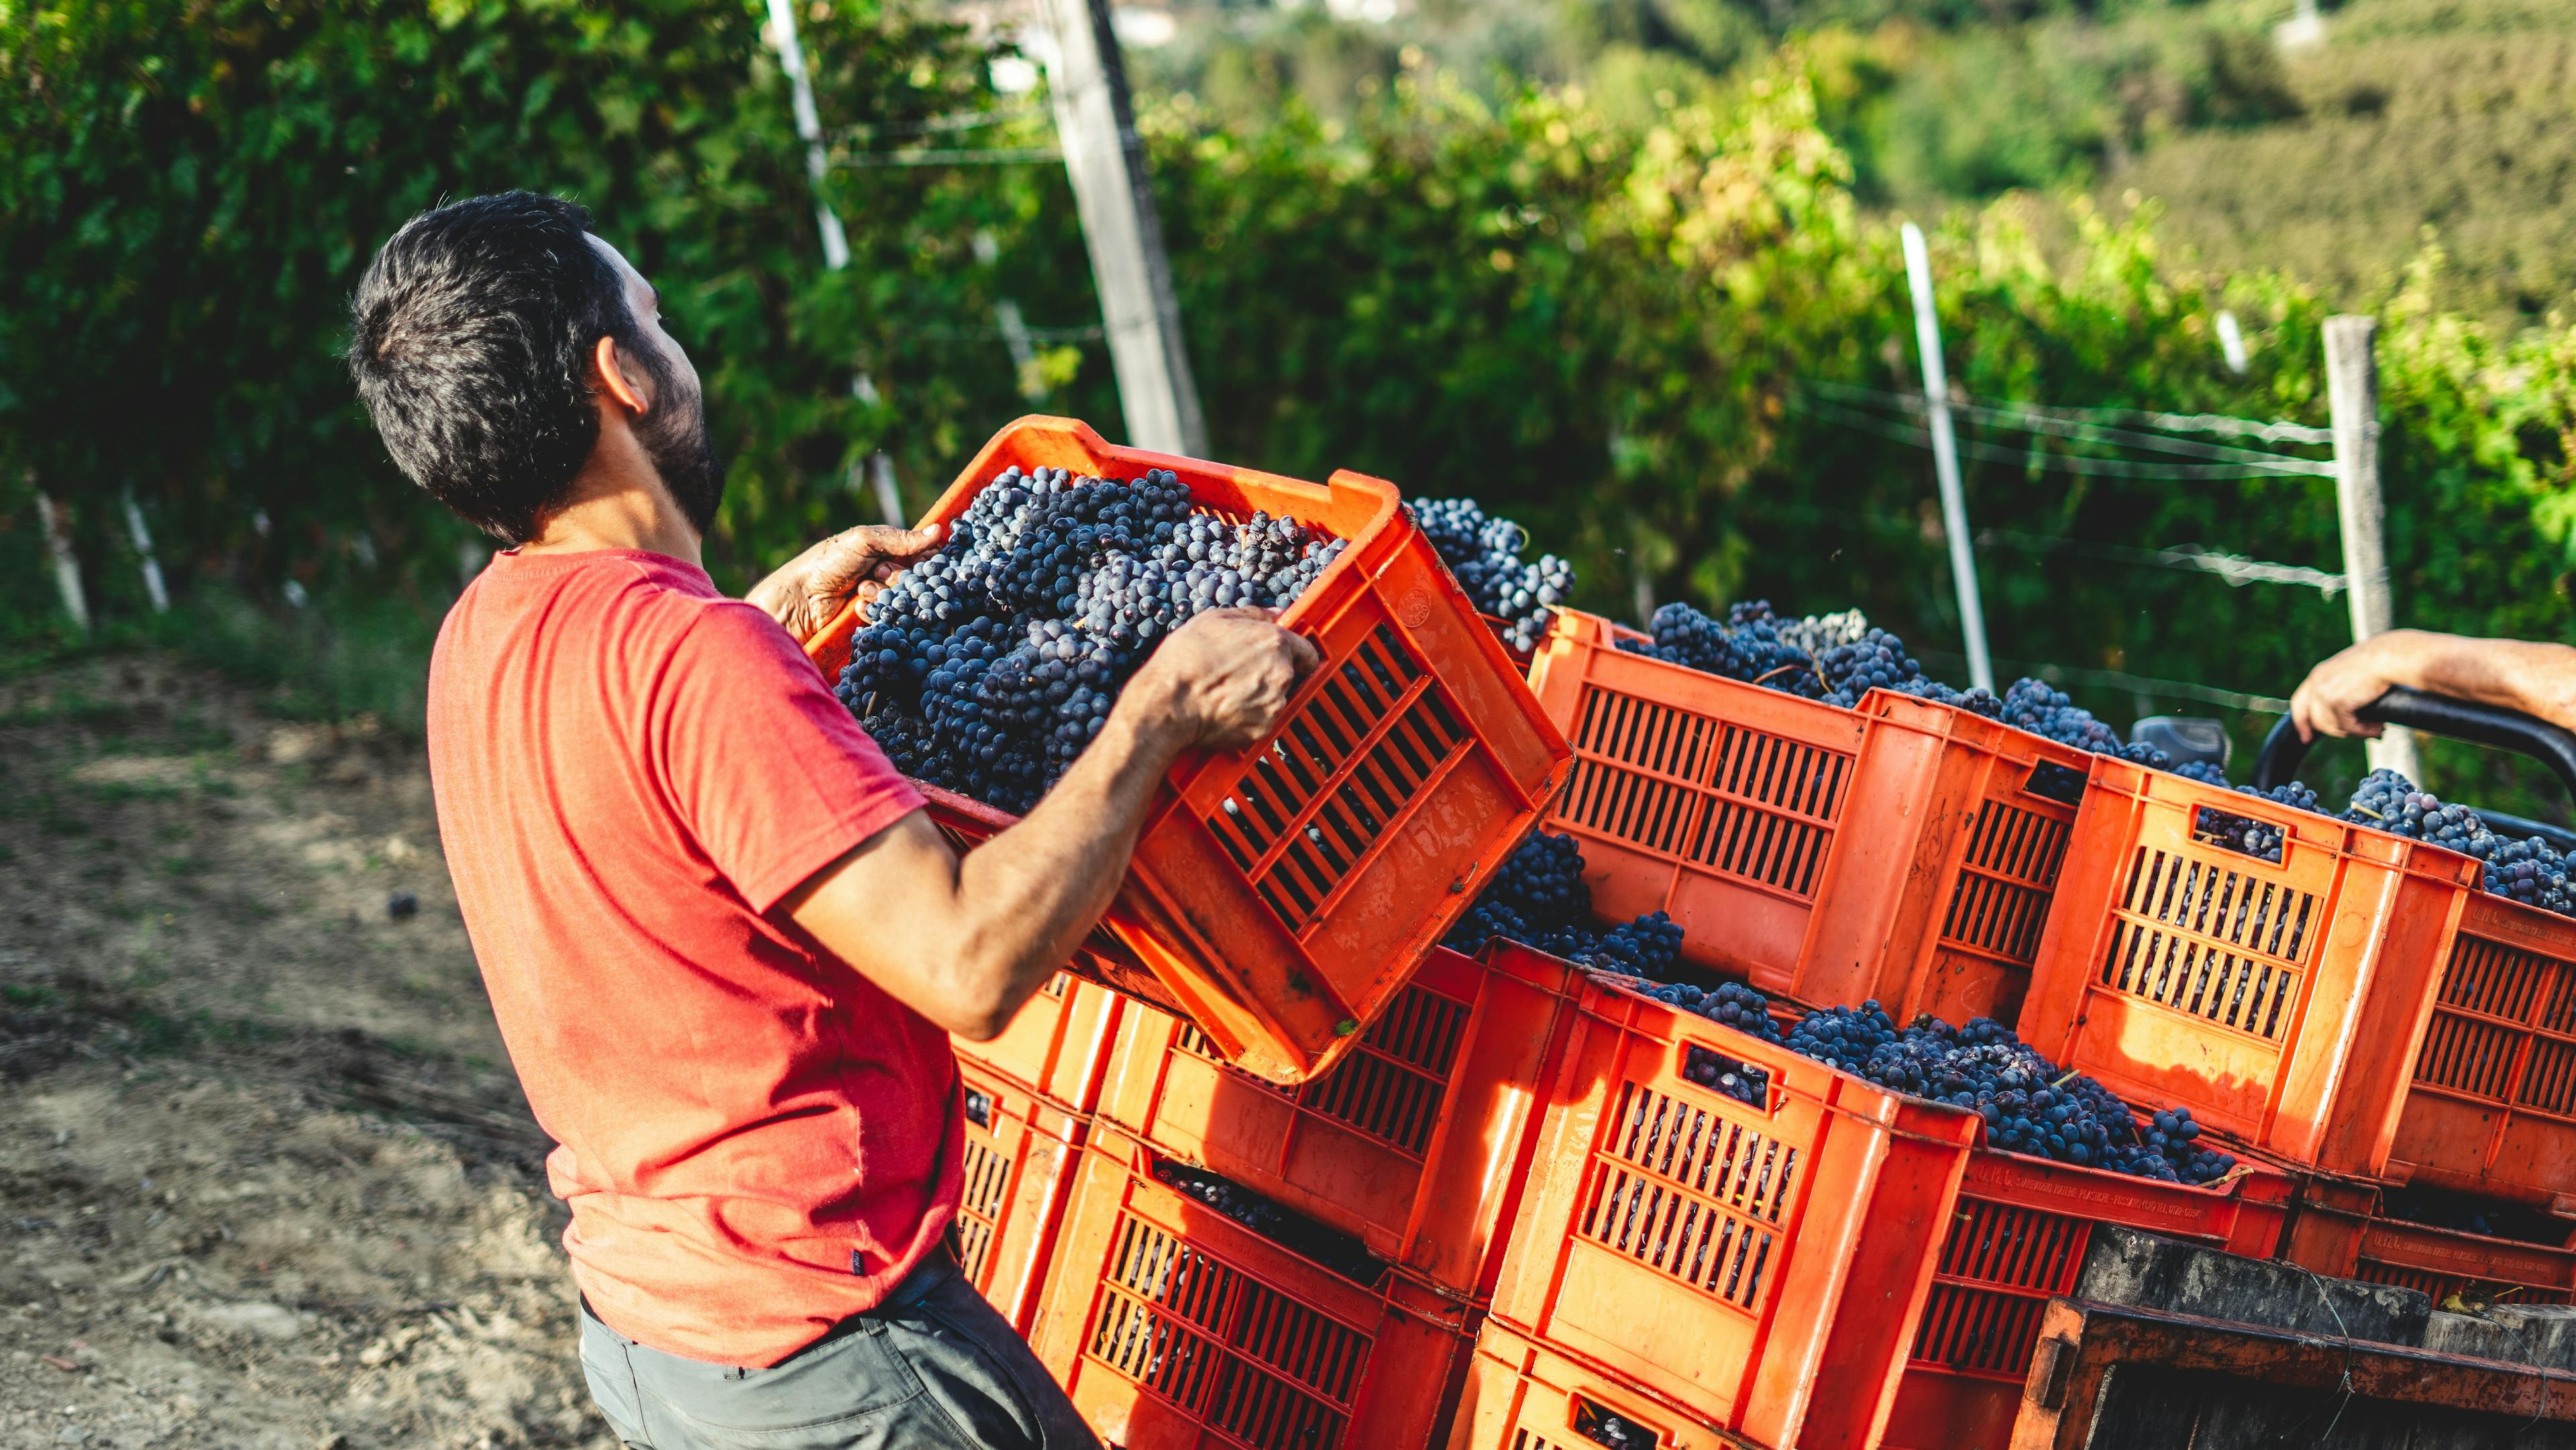 Harvesting Nebbiolo grapes in Serralunga